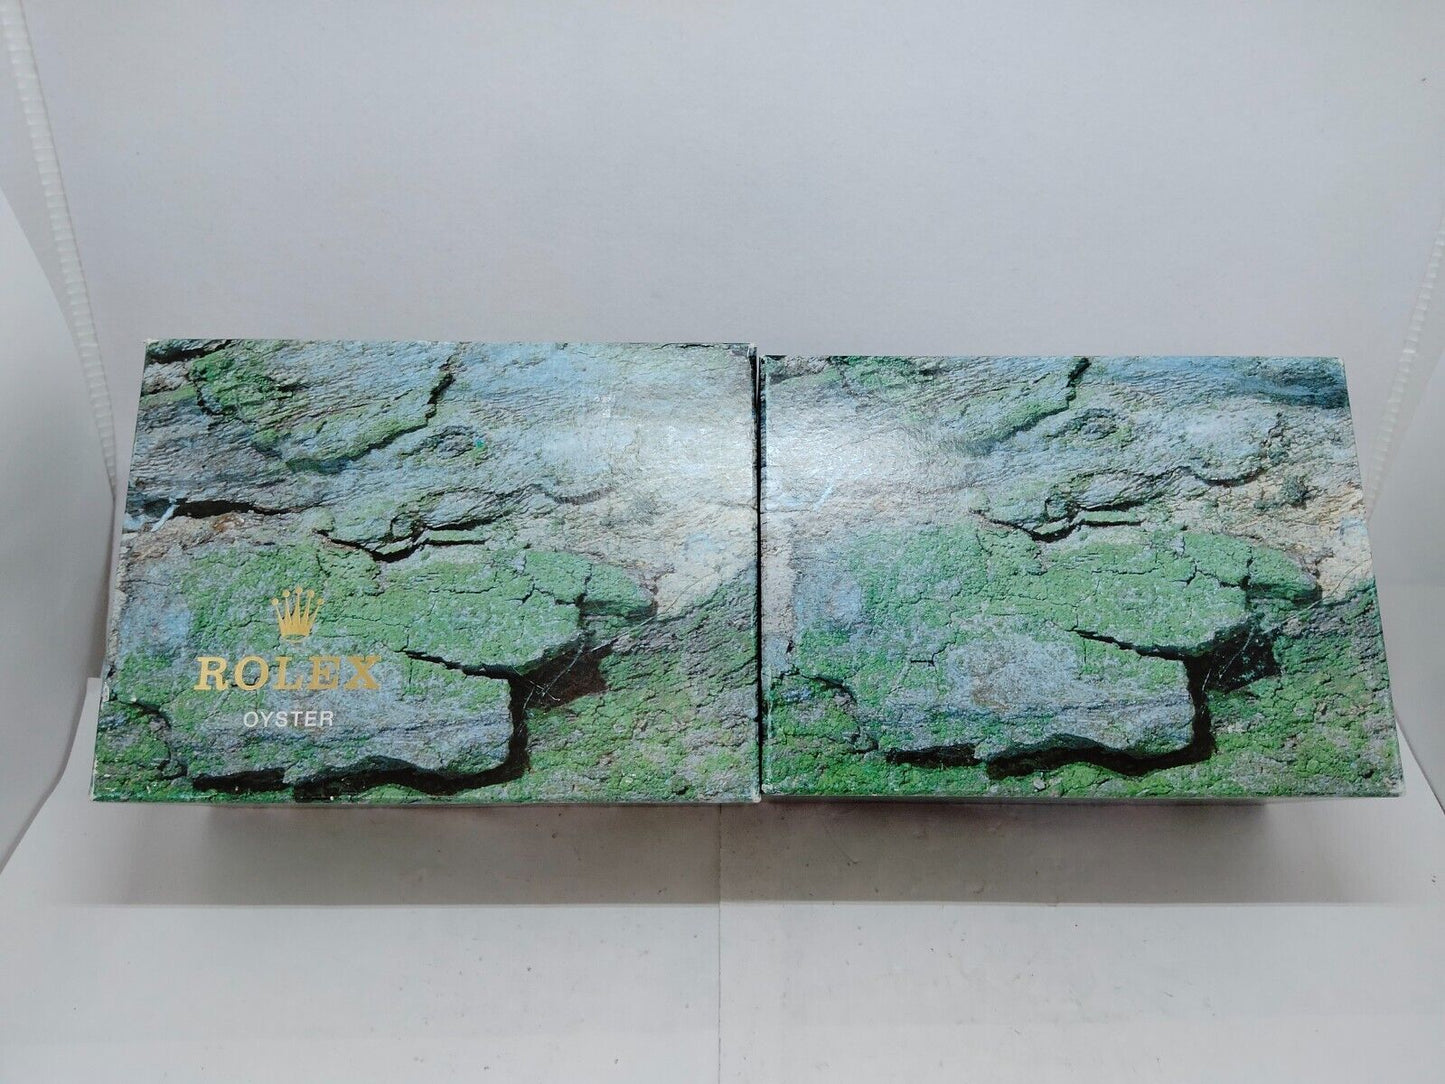 VINTAGE GENUINE ROLEX watch box case 68.00.08 green wood leather 0706009y39S